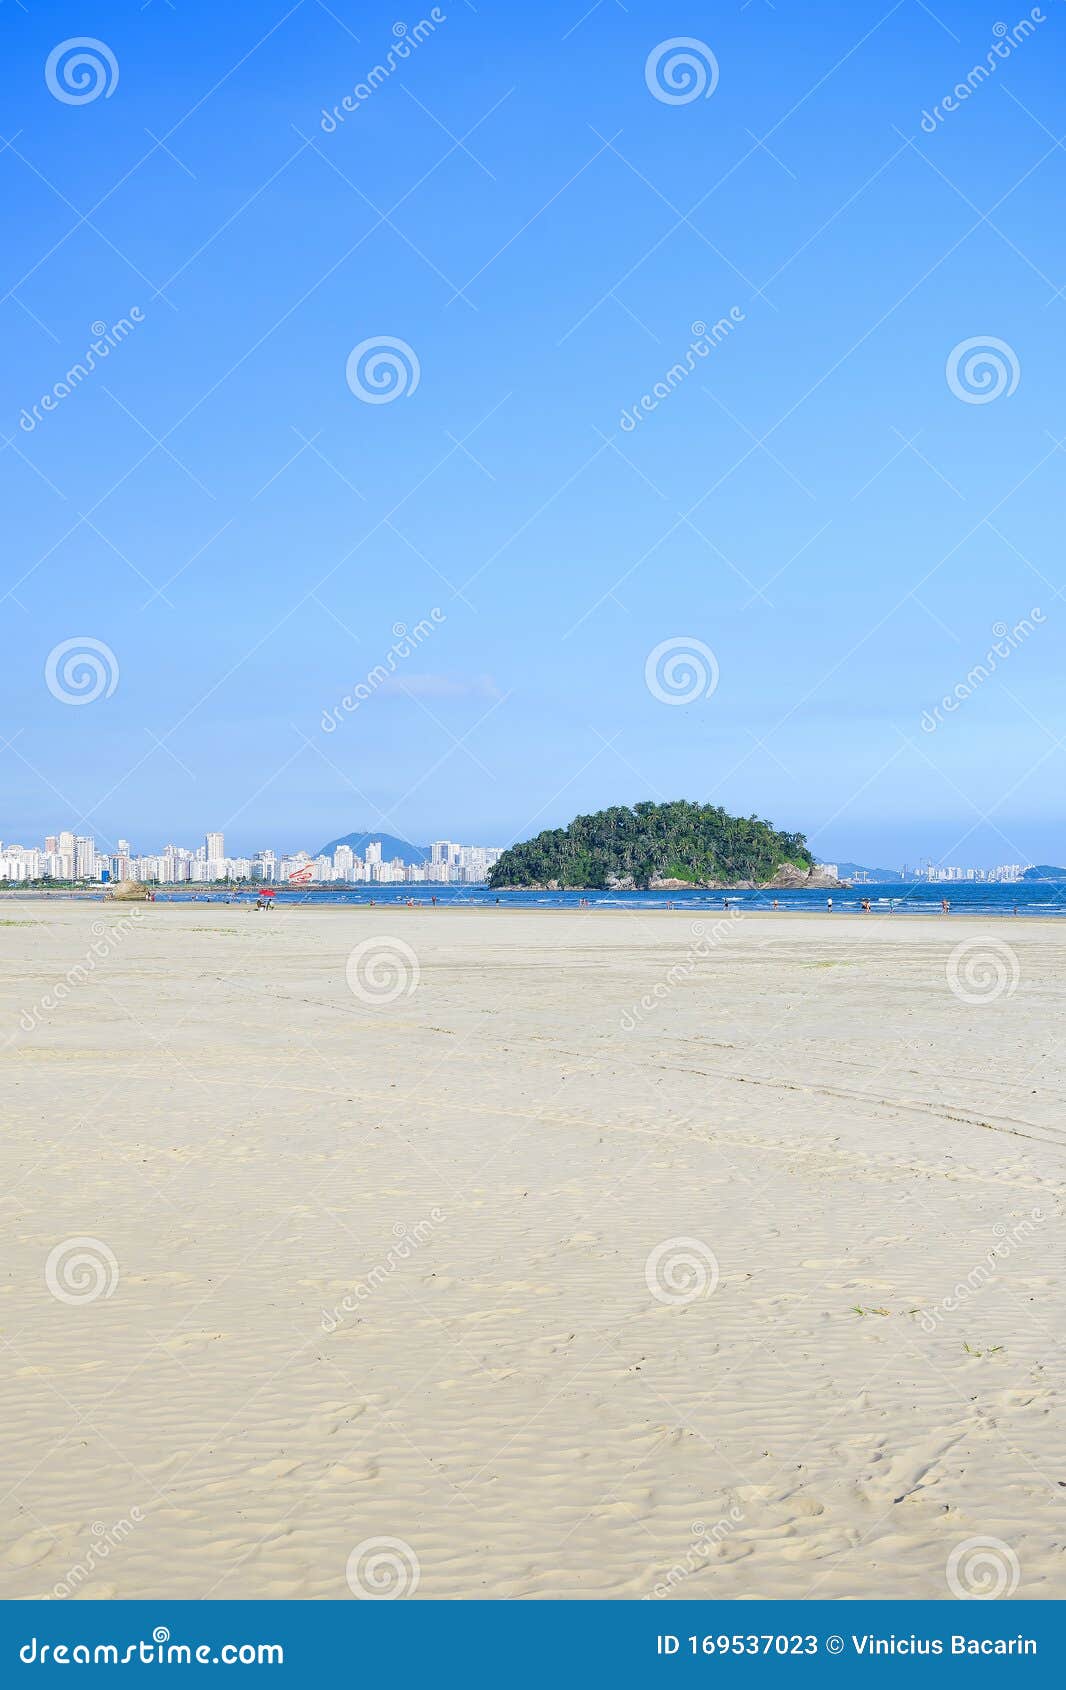 beaches of paulista coast, brazil